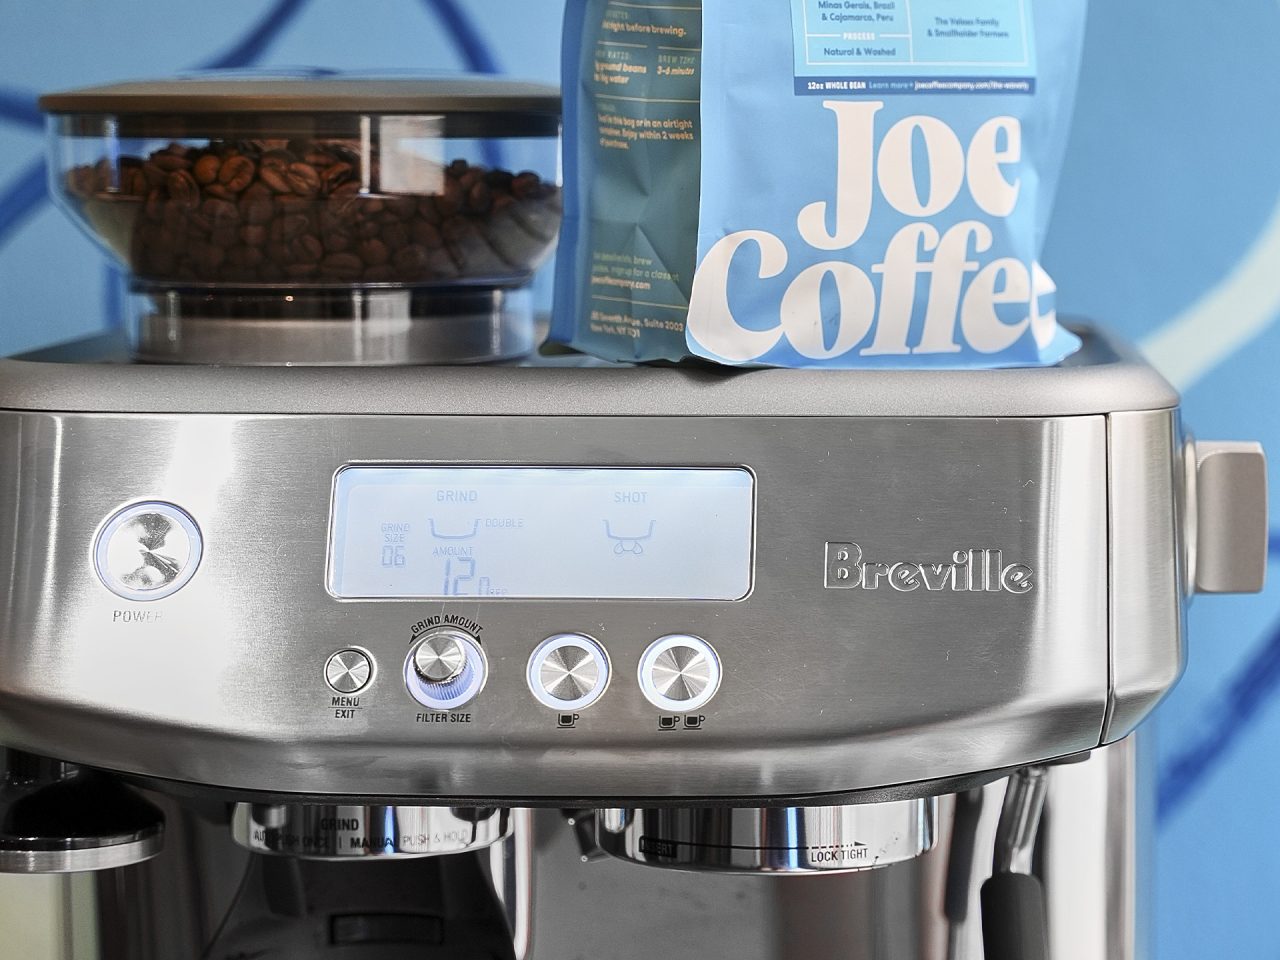 Breville espresso machine with Joe Coffee bag on top